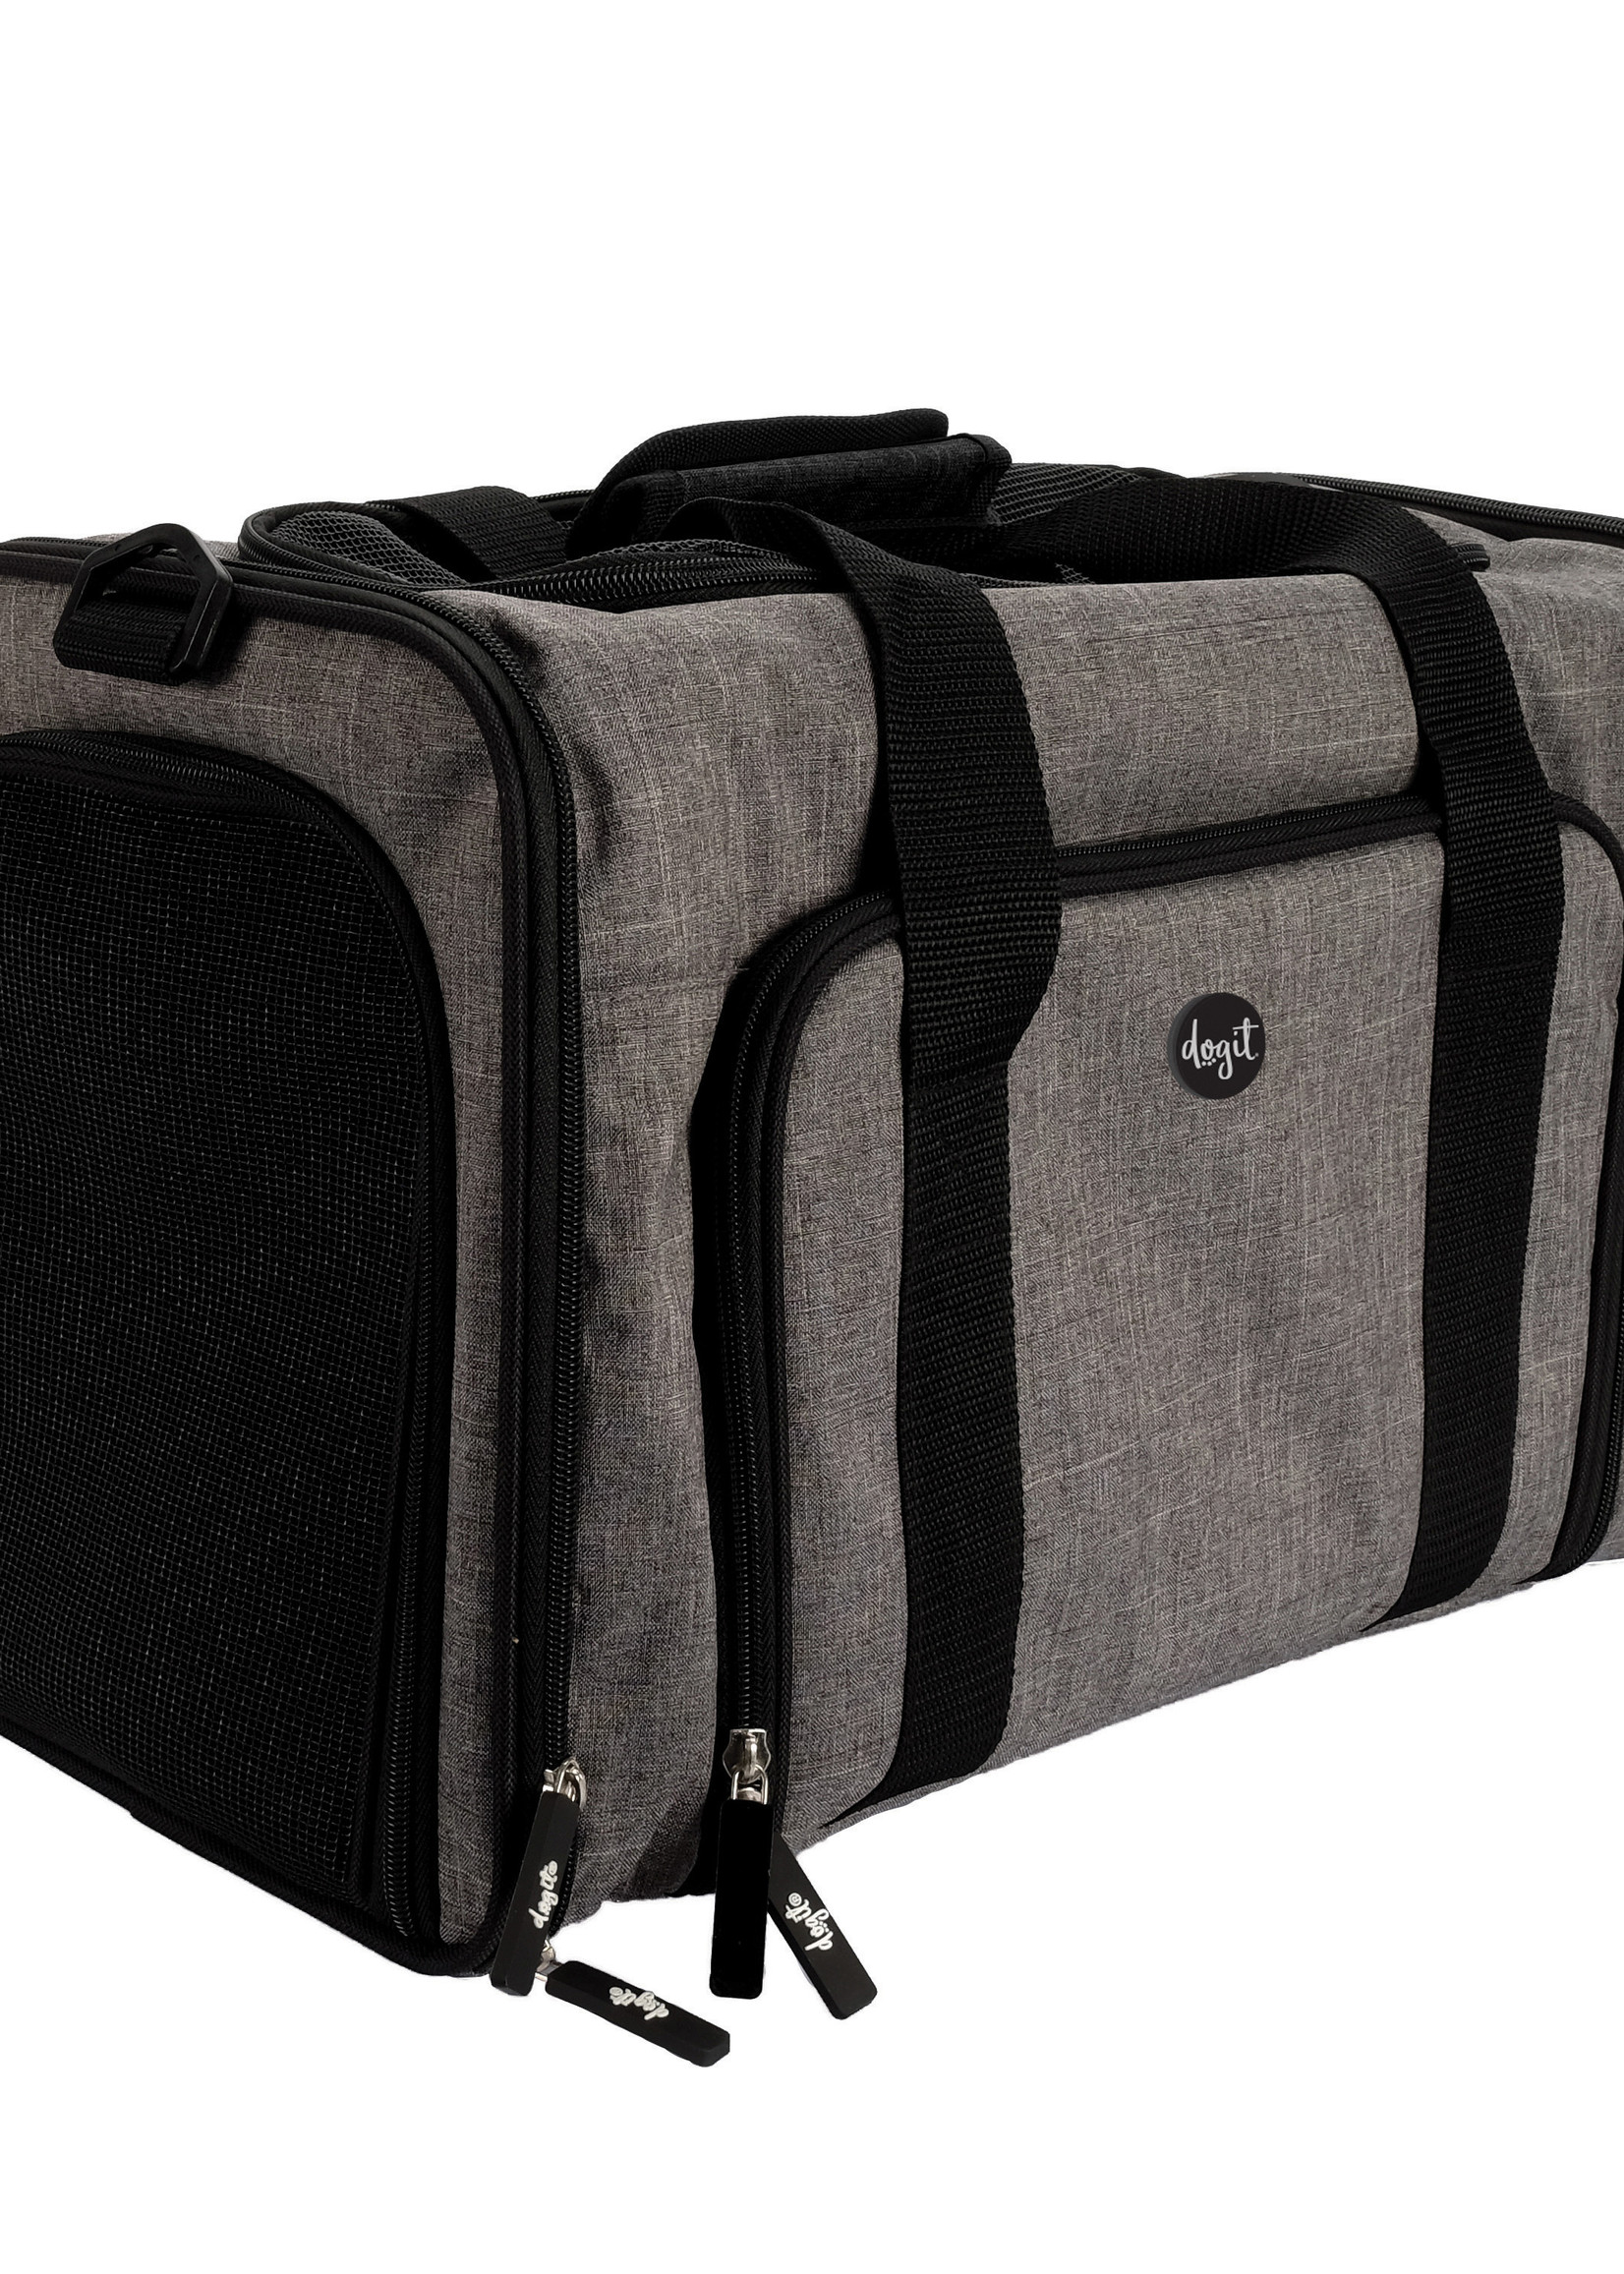 Dogit® Dogit® Explorer Soft Carrier Expandable Carry Bag